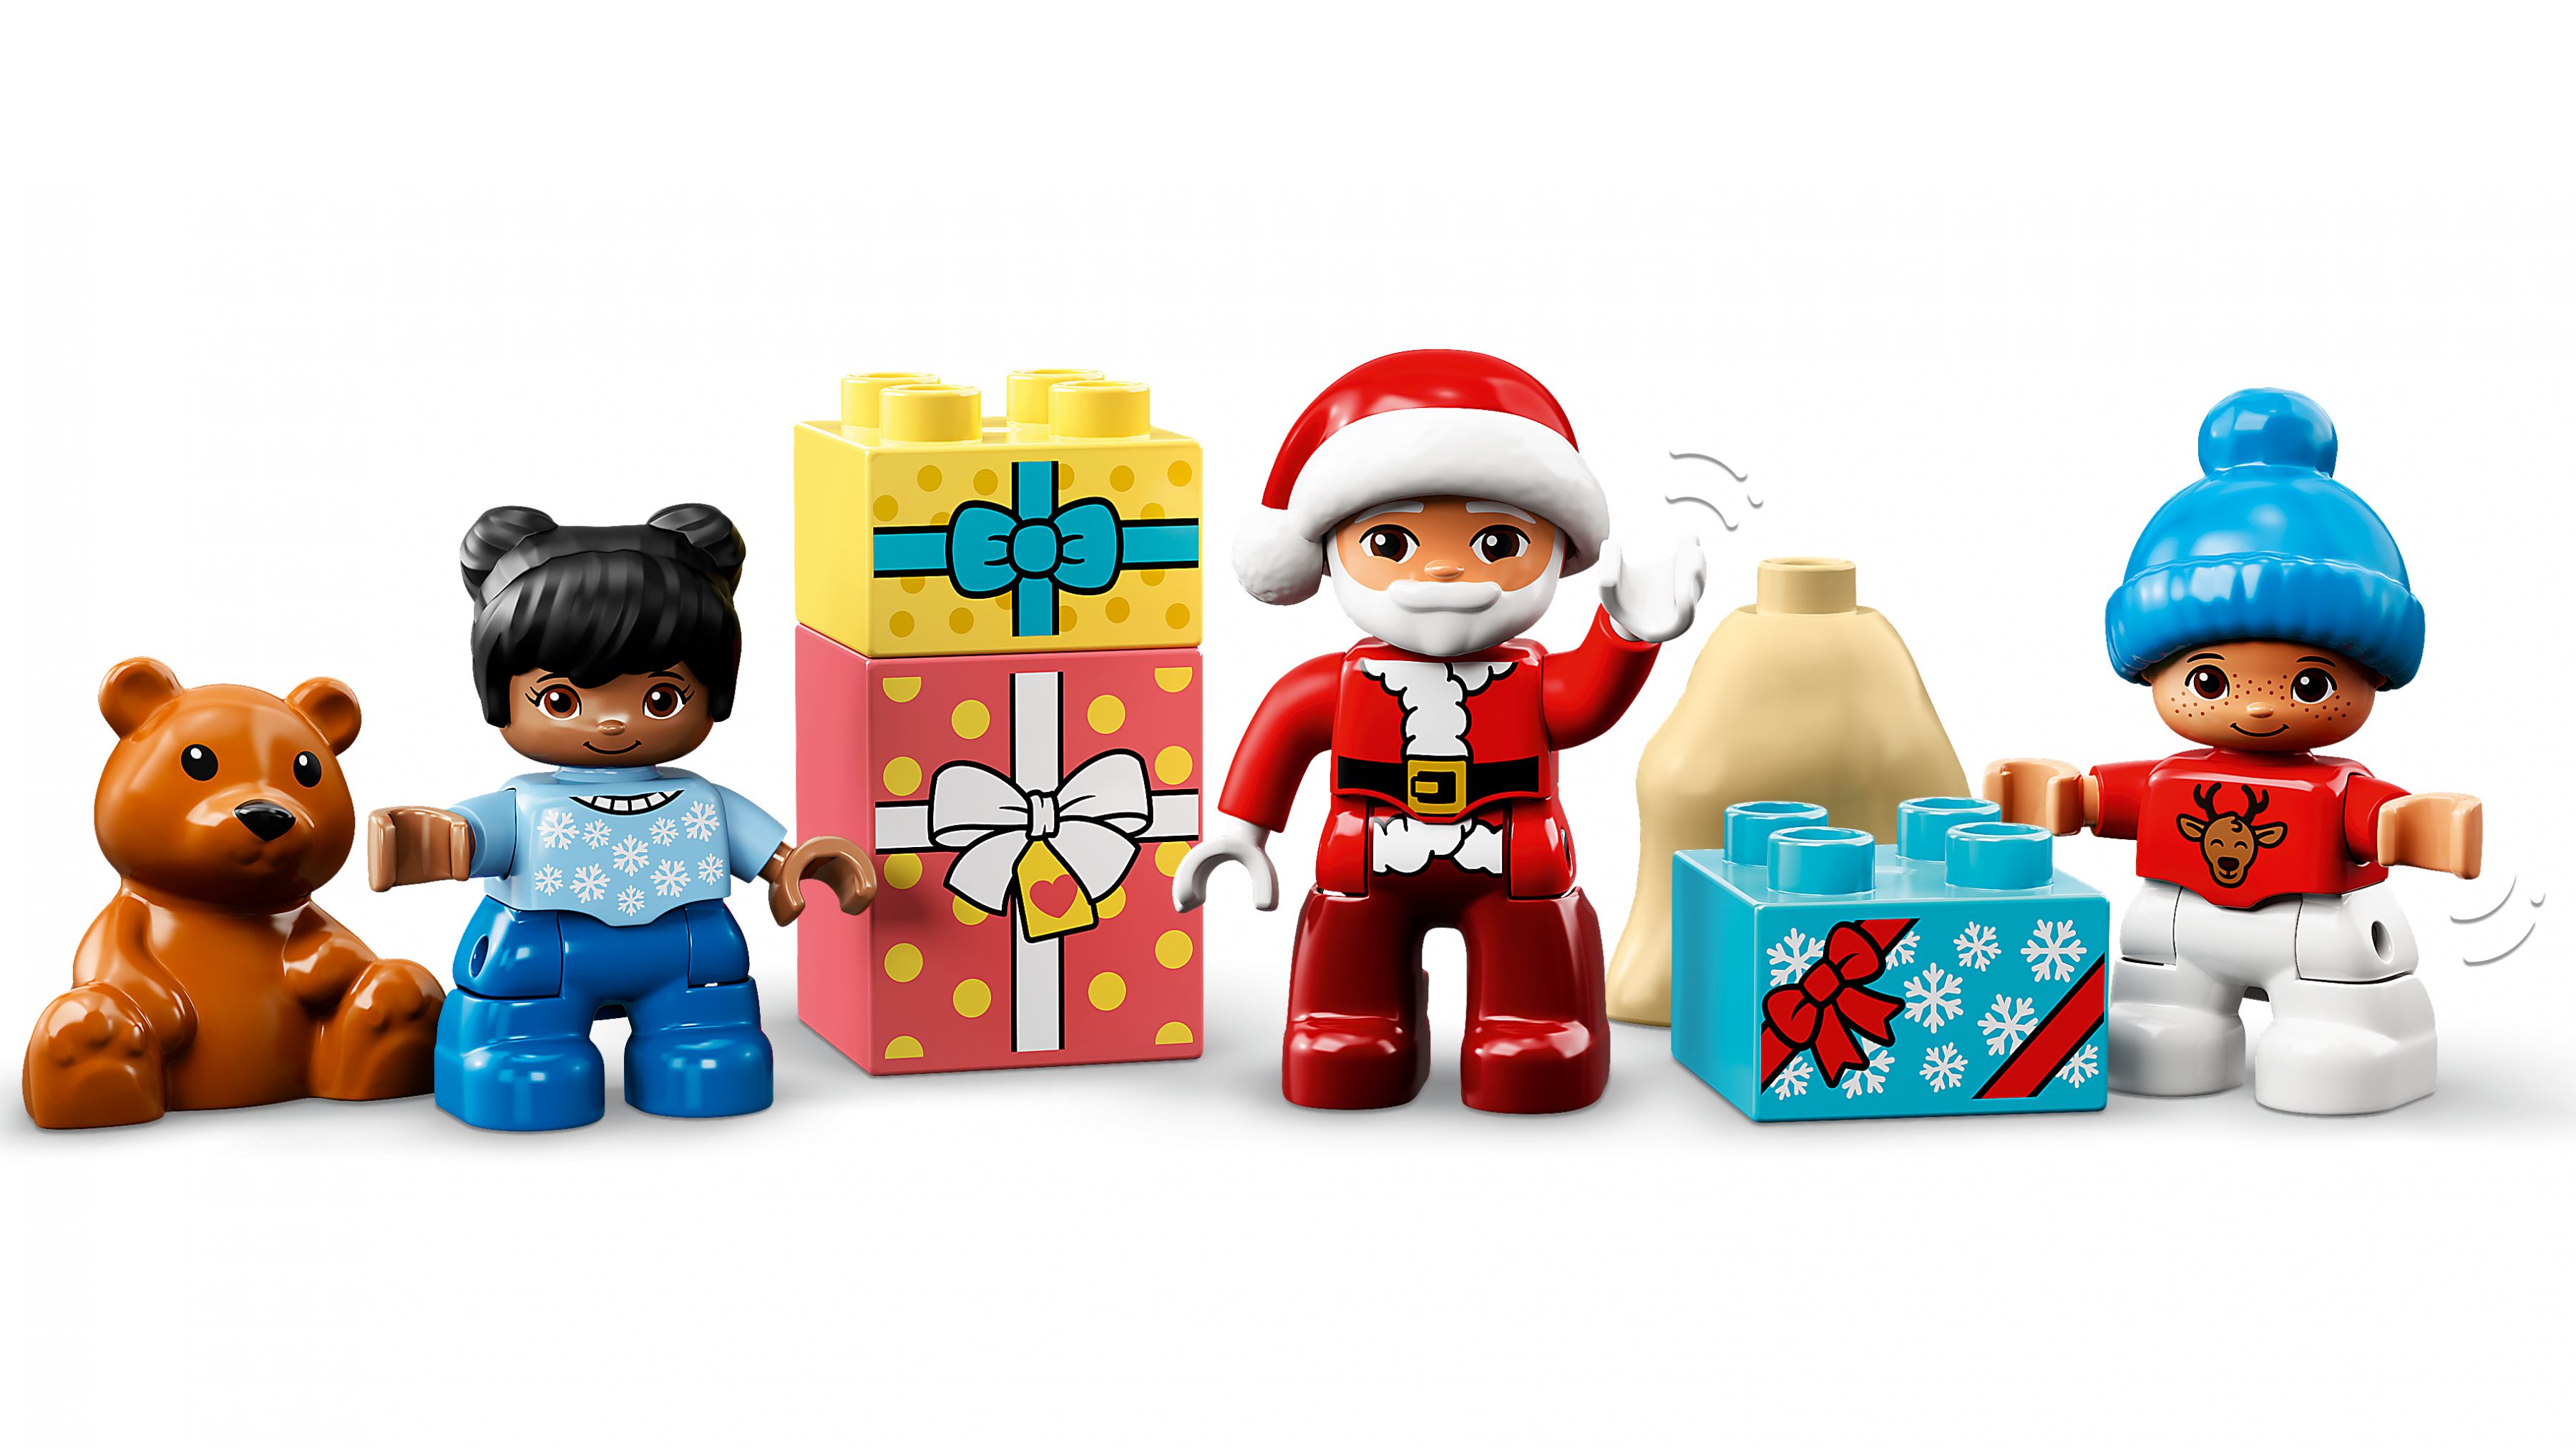 LEGO Duplo 10976 Lebkuchenhaus mit Weihnachtsmann LEGO_10976_WEB_SEC02_NOBG.jpg